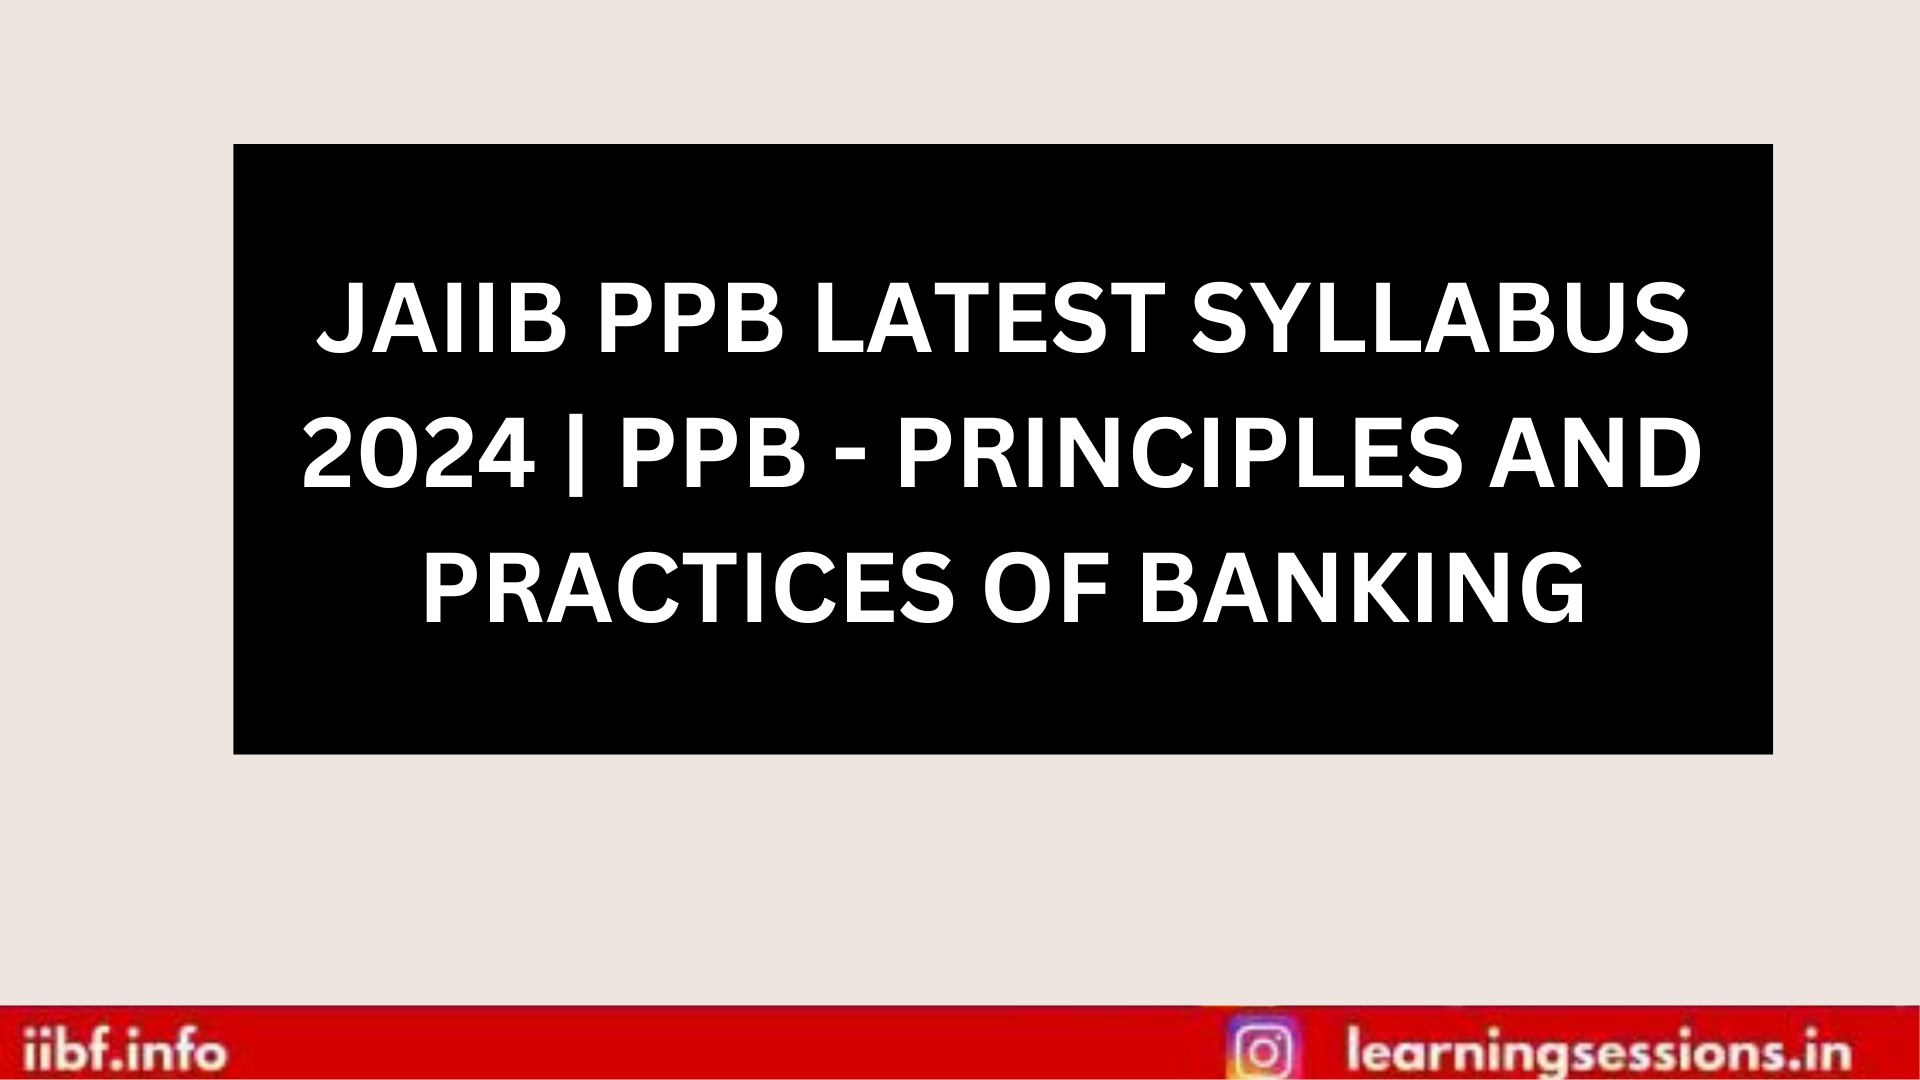 JAIIB PPB LATEST SYLLABUS 2024 | PPB - PRINCIPLES AND PRACTICES OF BANKING